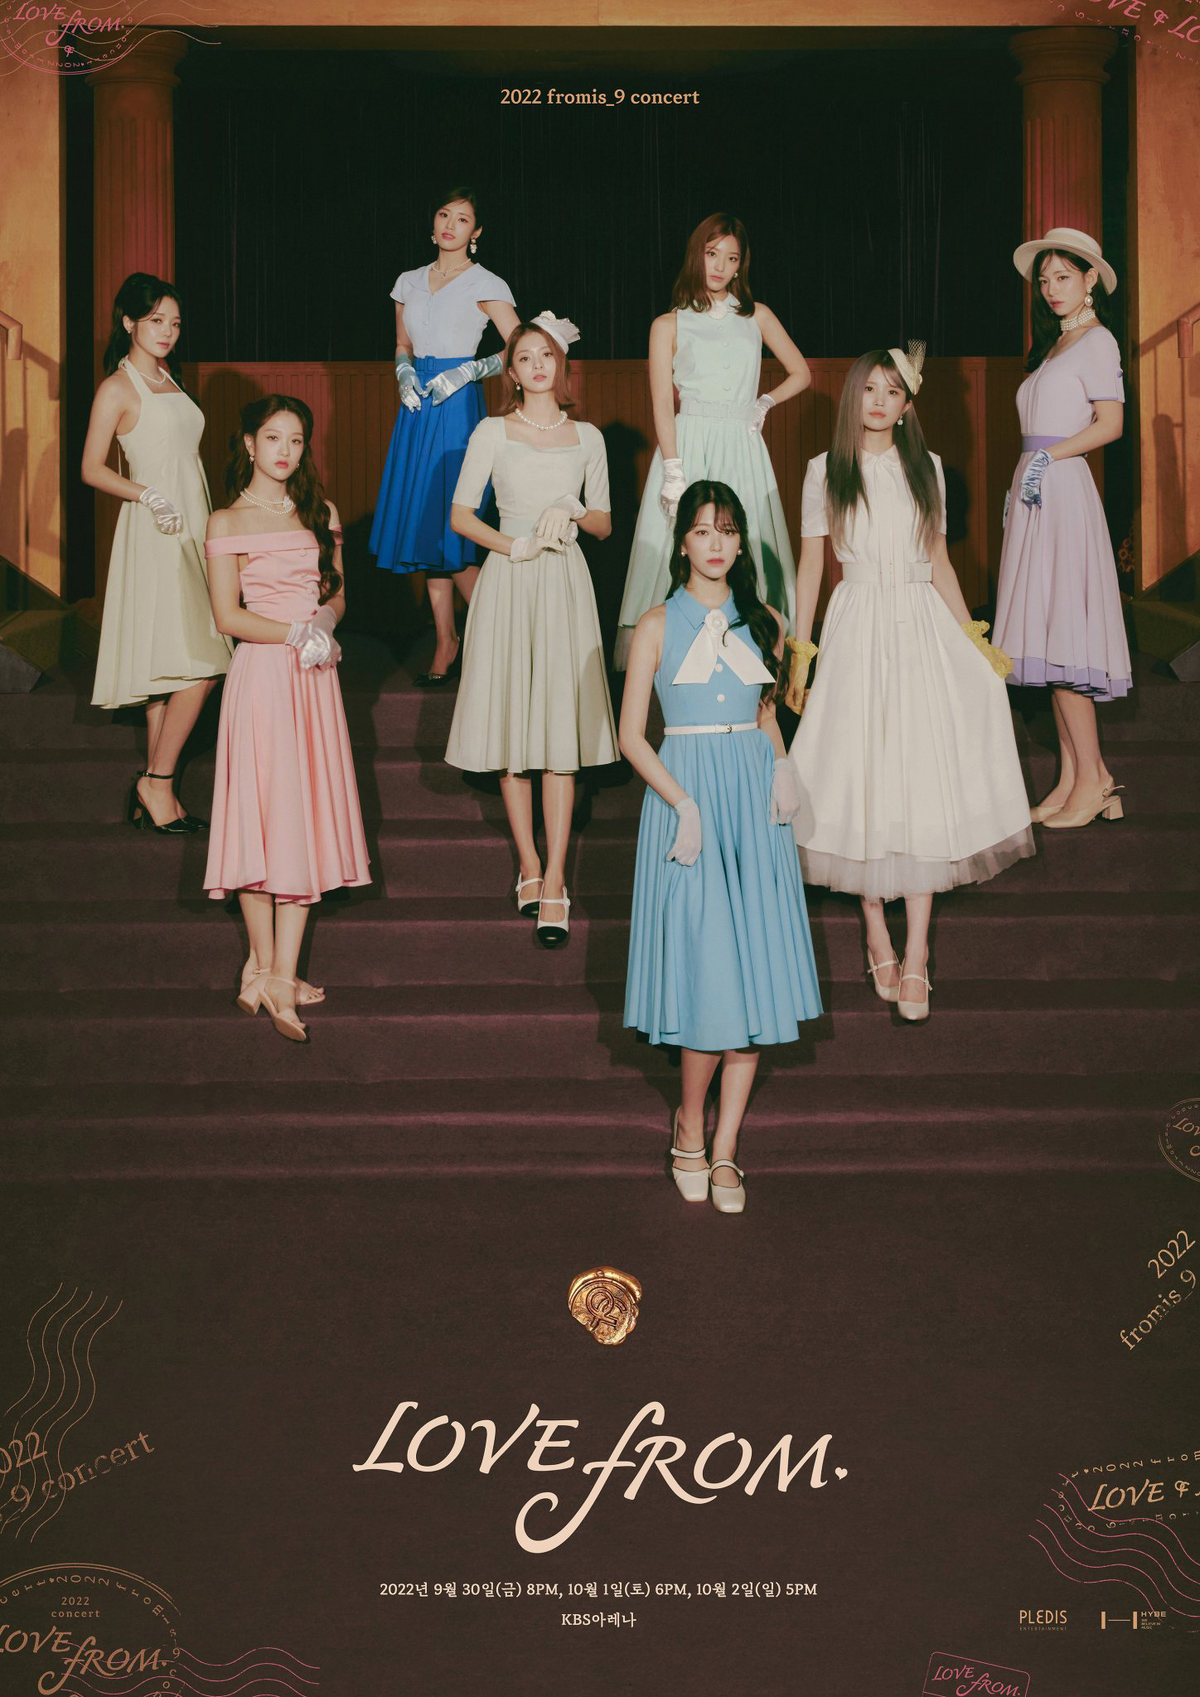 2022 fromis_9 Concert <Love From.> | Kpop Wiki | Fandom